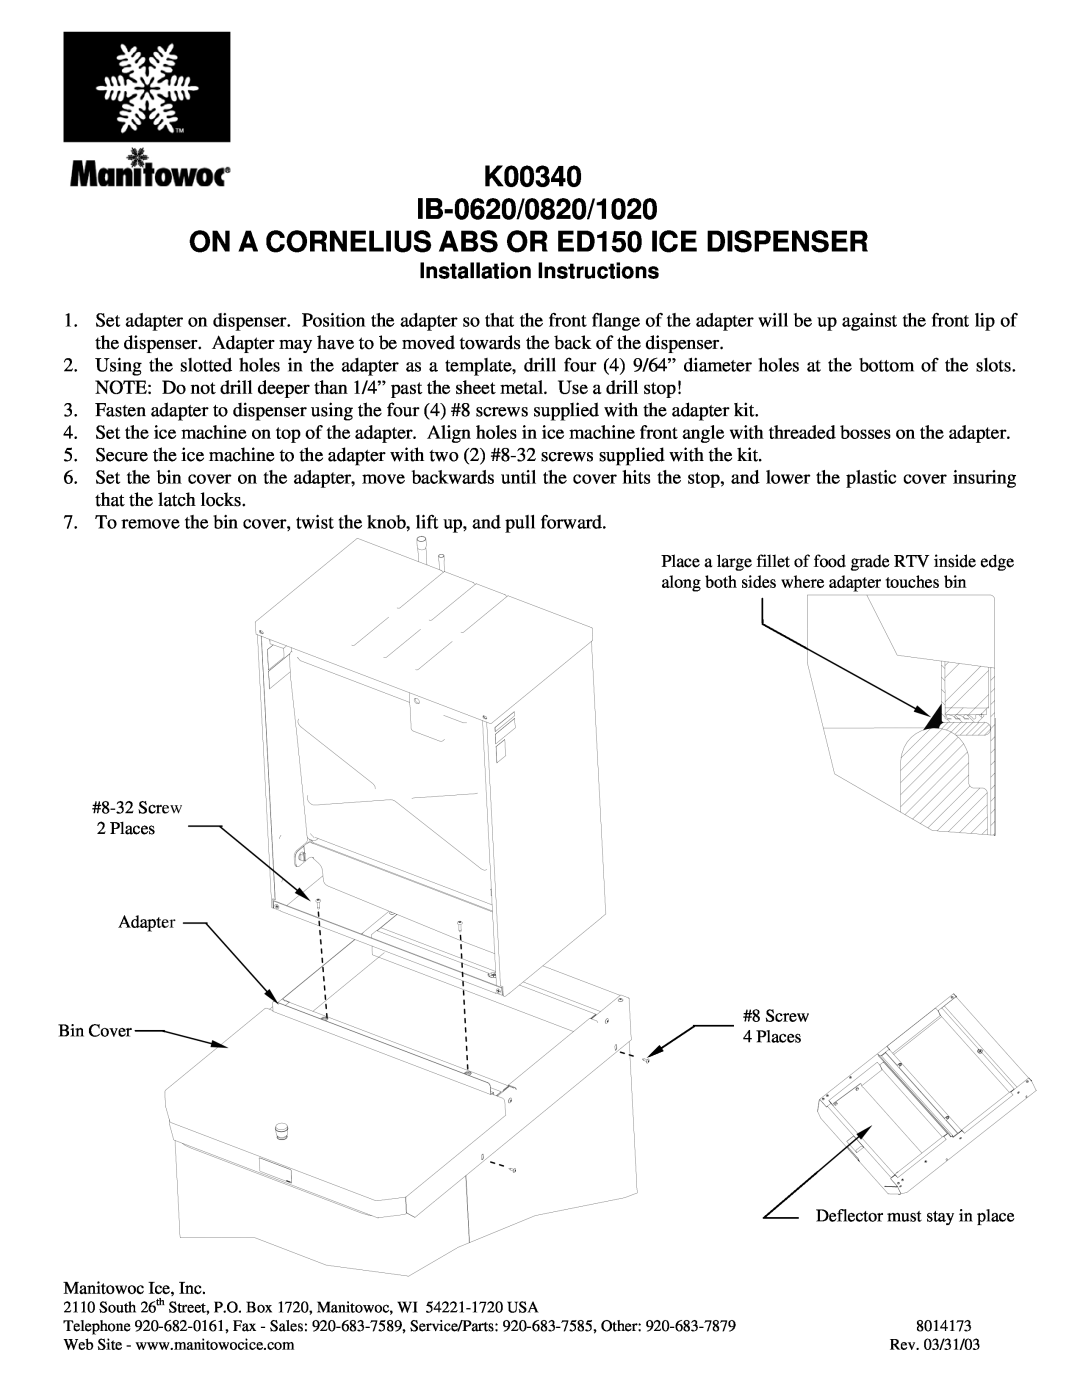 Manitowoc Ice installation instructions K00340 IB-0620/0820/1020, ON A CORNELIUS ABS OR ED150 ICE DISPENSER 